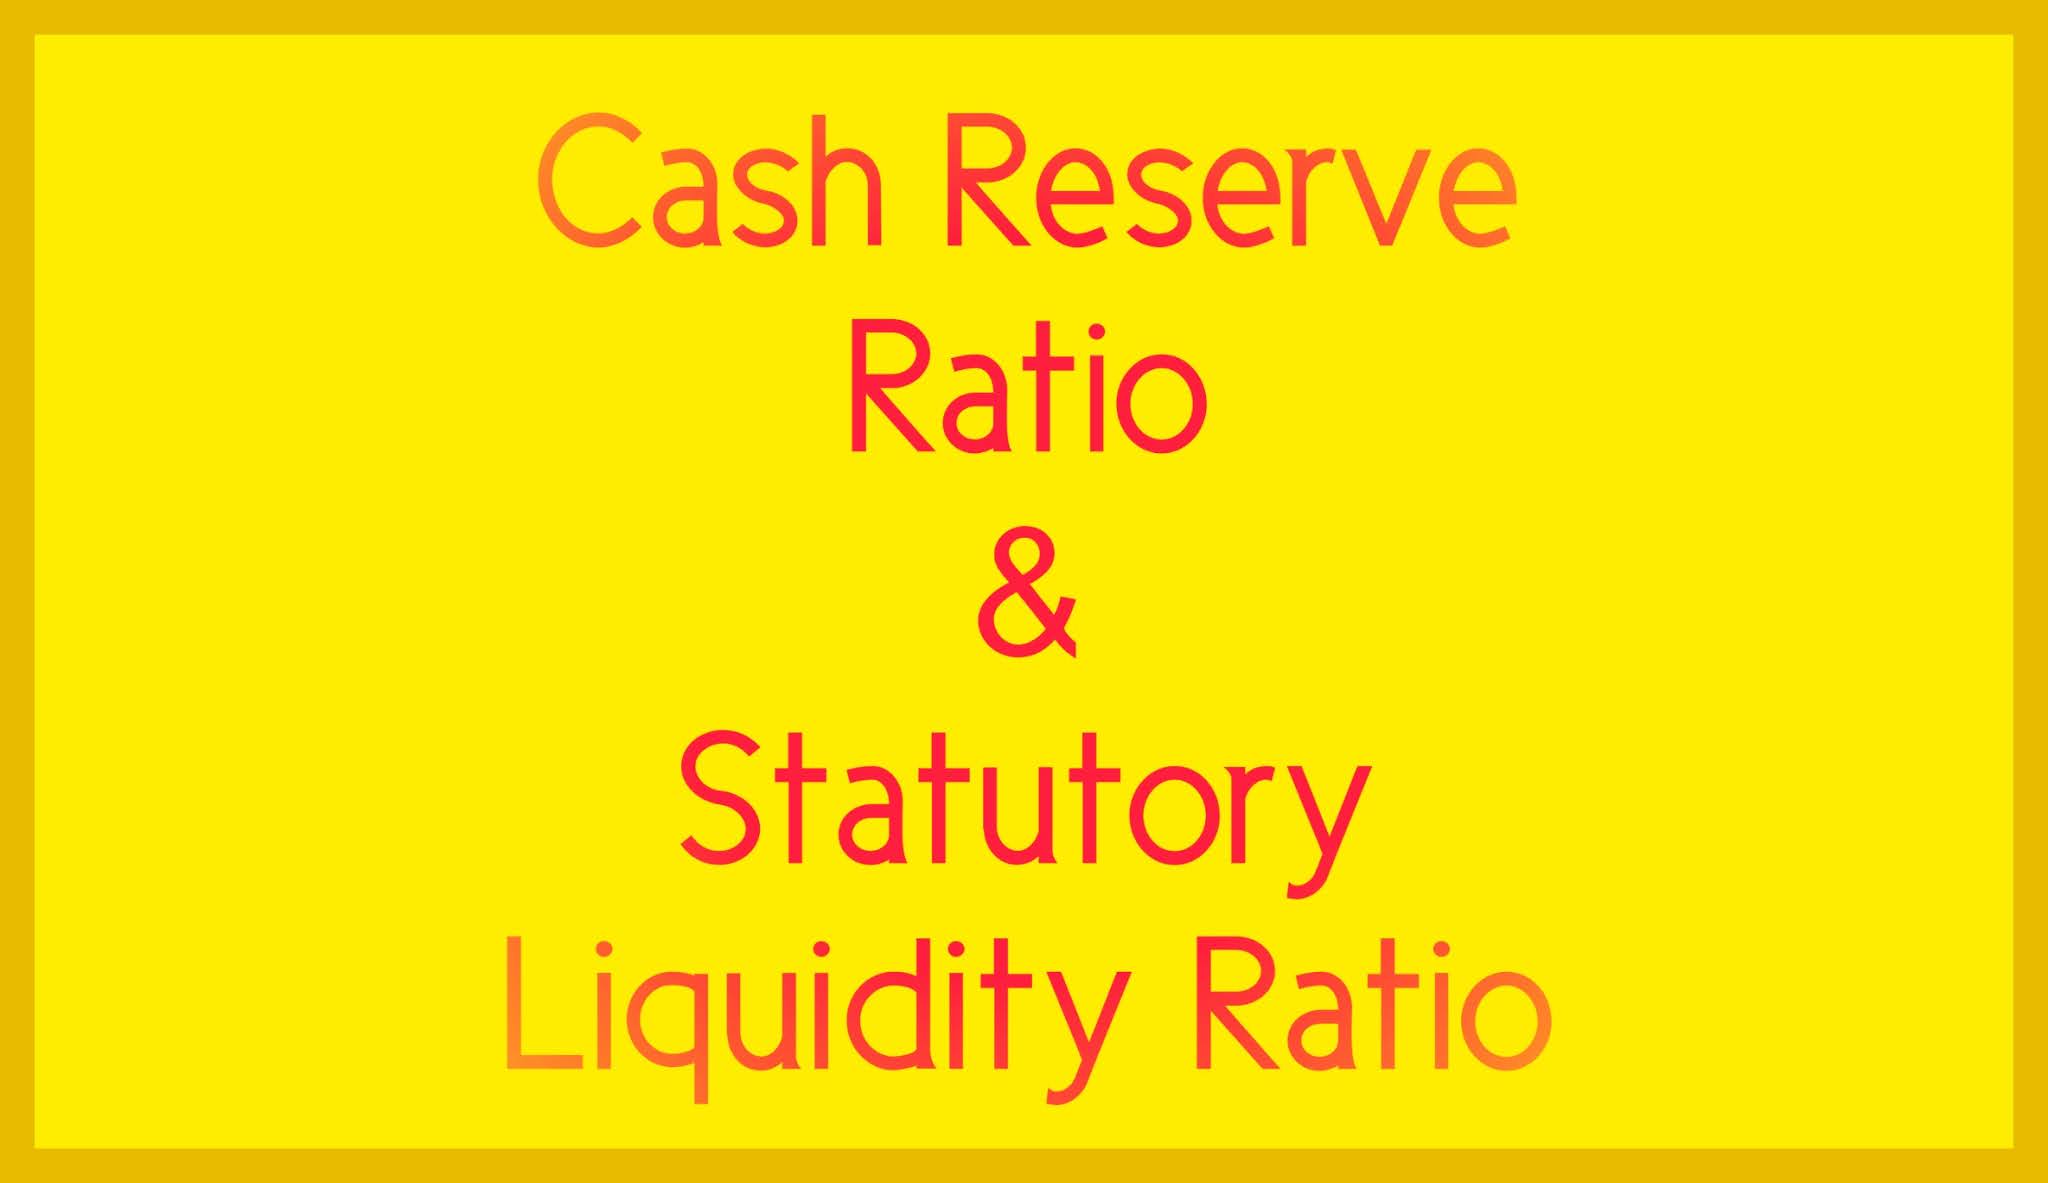 Cash Reserve Ratio & Statutory Liquidation Ratio